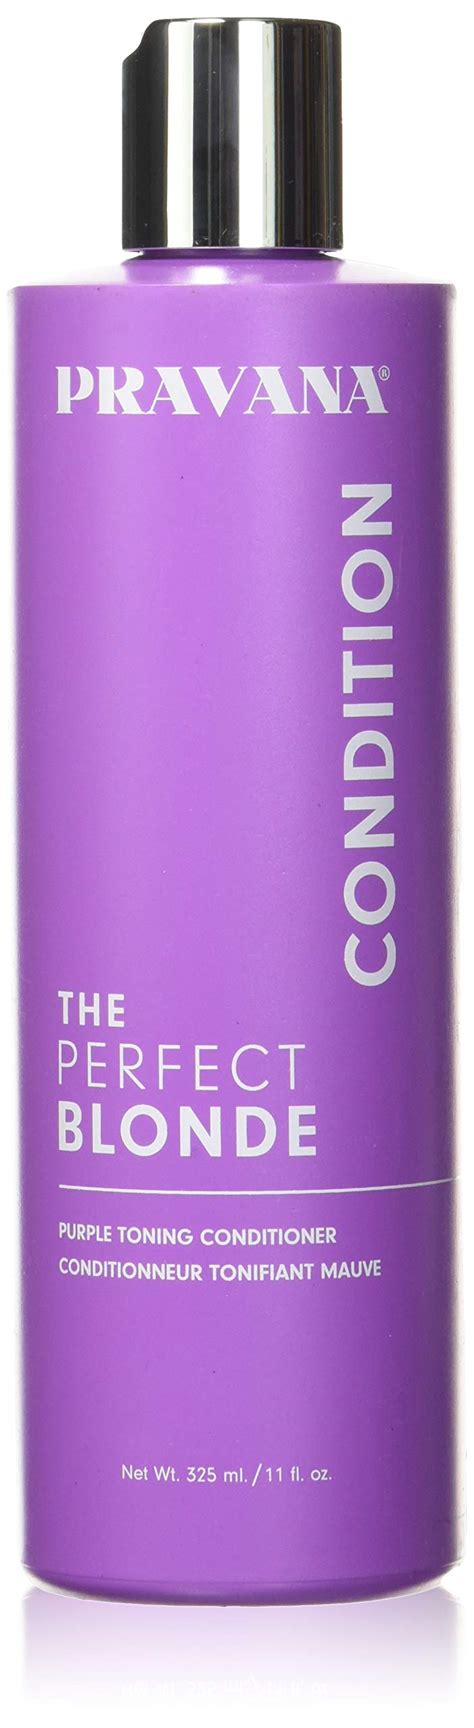 Pravana The Perfect Blonde Purple Toning Conditioner 101 Oz